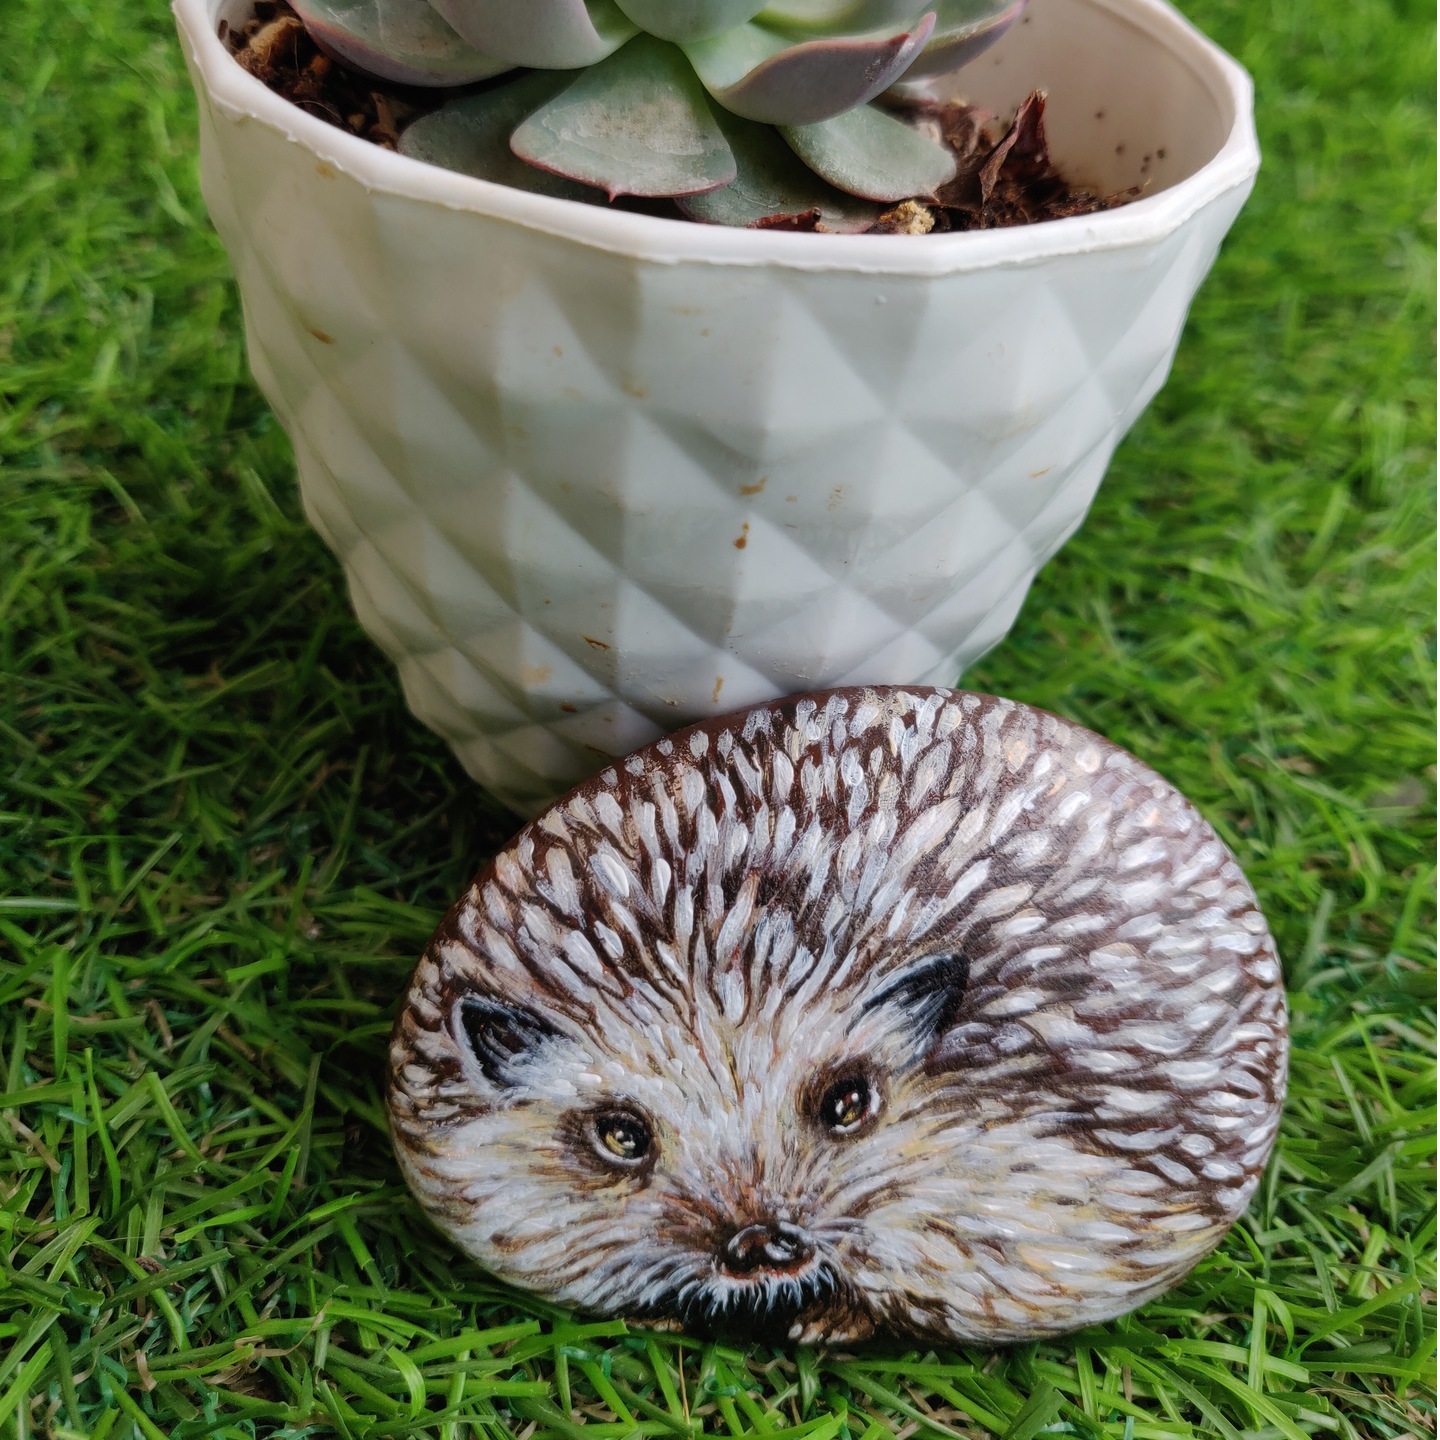 Pet animal Hedgehog handpainted on rock for garden decor, gifting